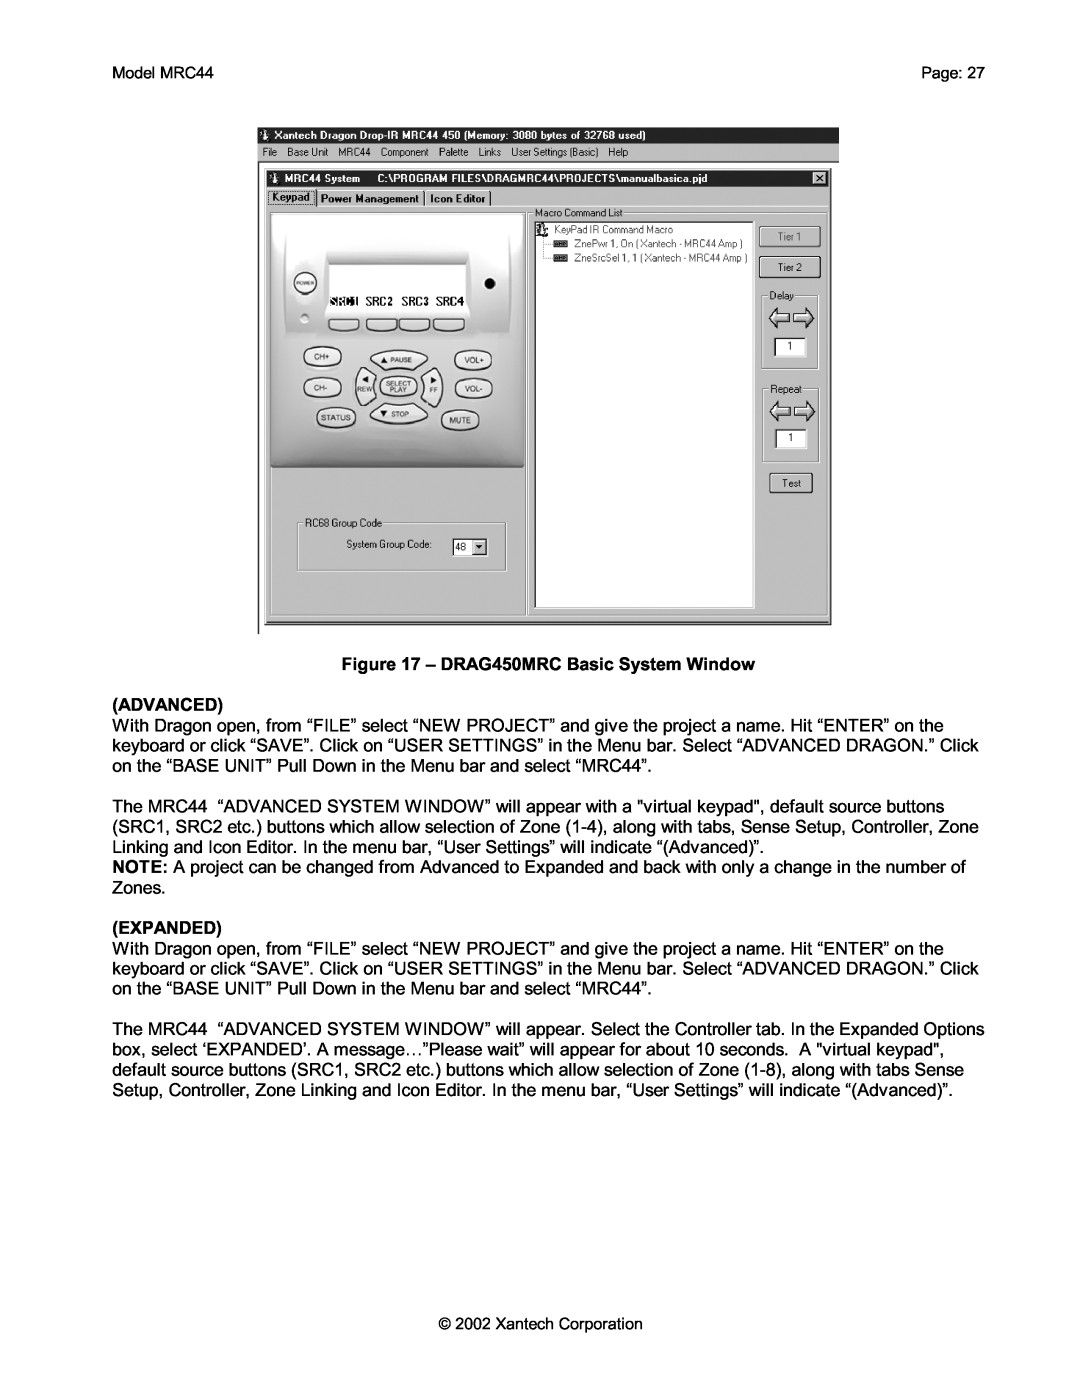 Xantech MRC44 installation instructions DRAG450MRC Basic System Window, Advanced, Expanded 